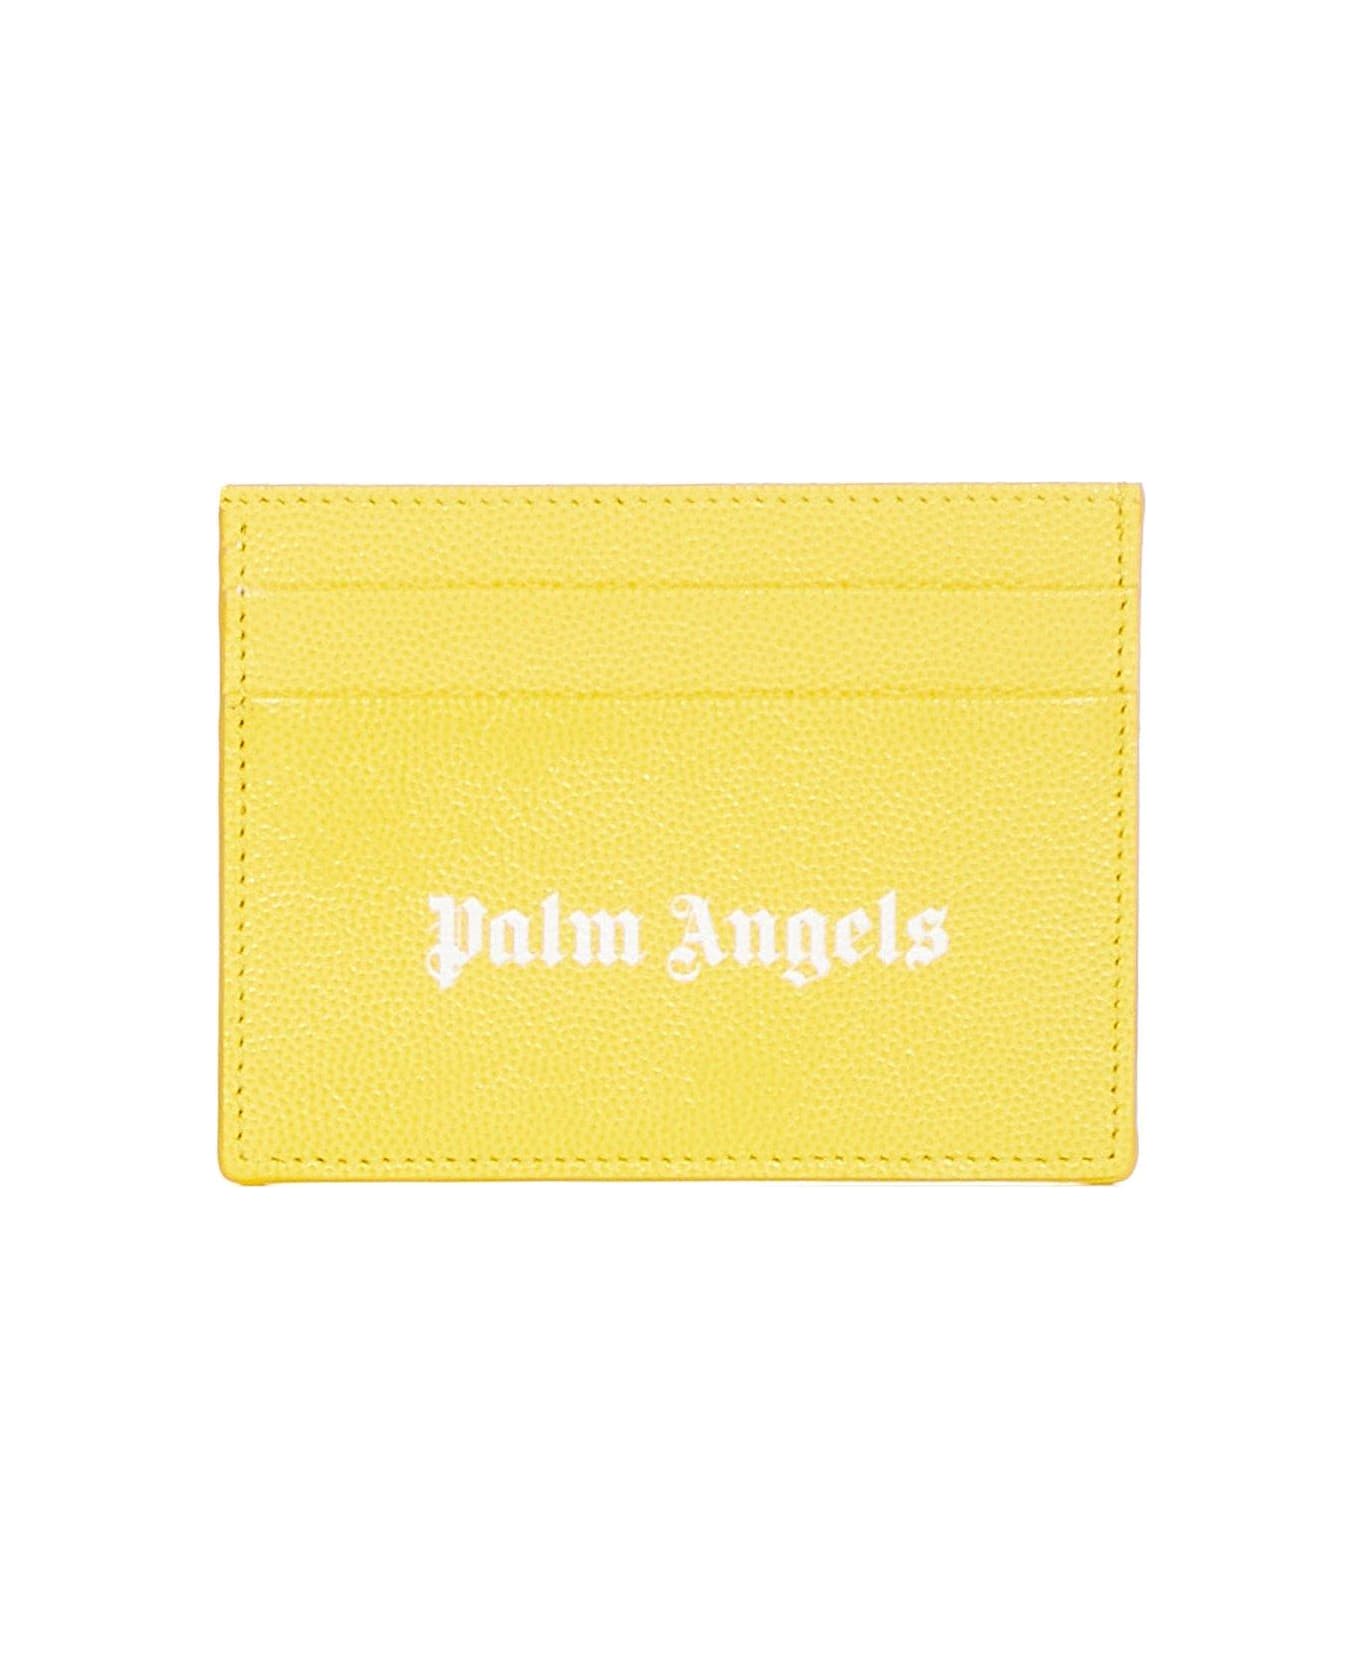 Palm Angels Logo Printed Cardholder - Yellow